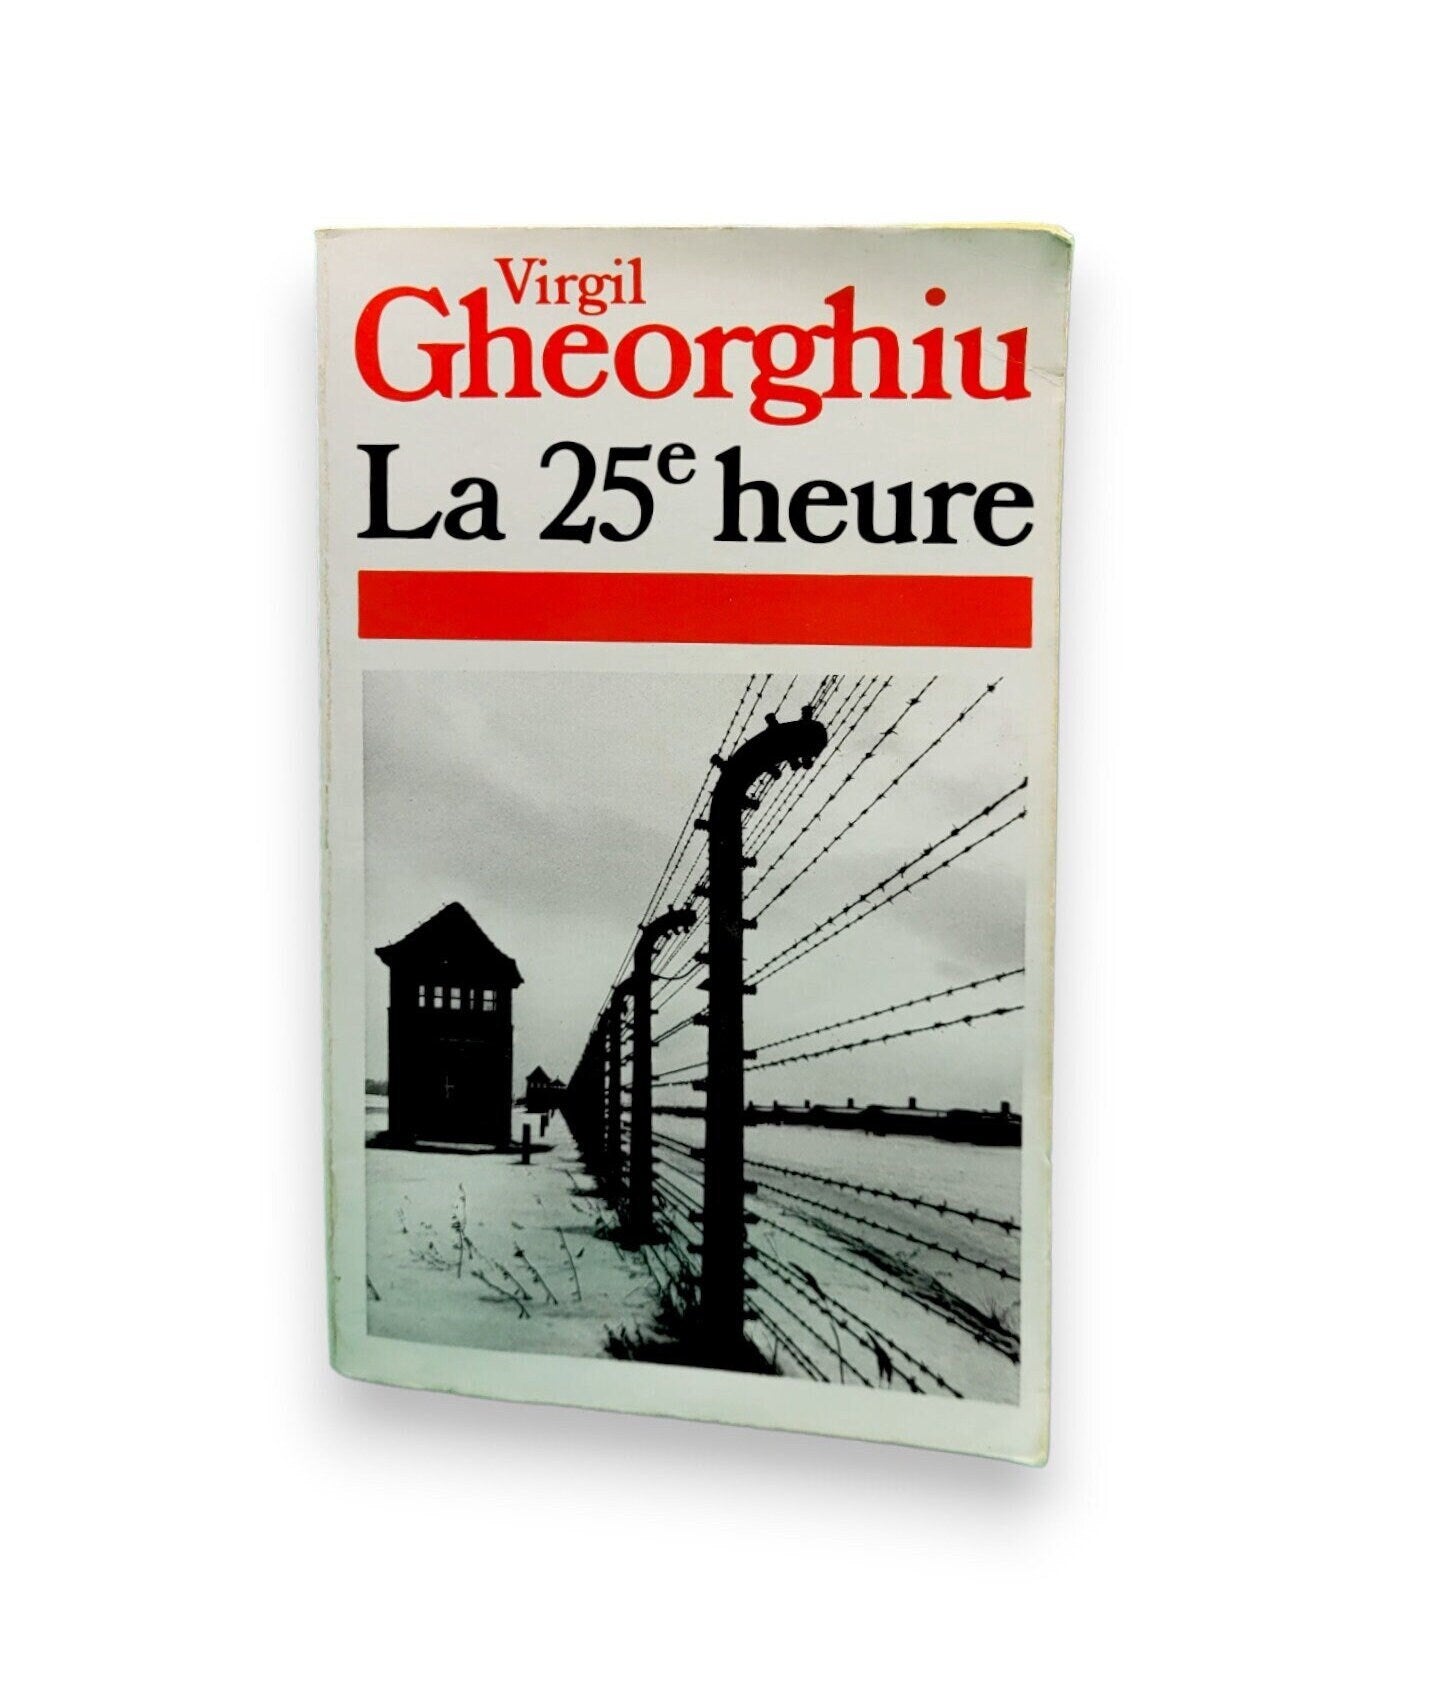 La 25e Heure (The 25th Hour) by Virgil Gheorghiu 1957